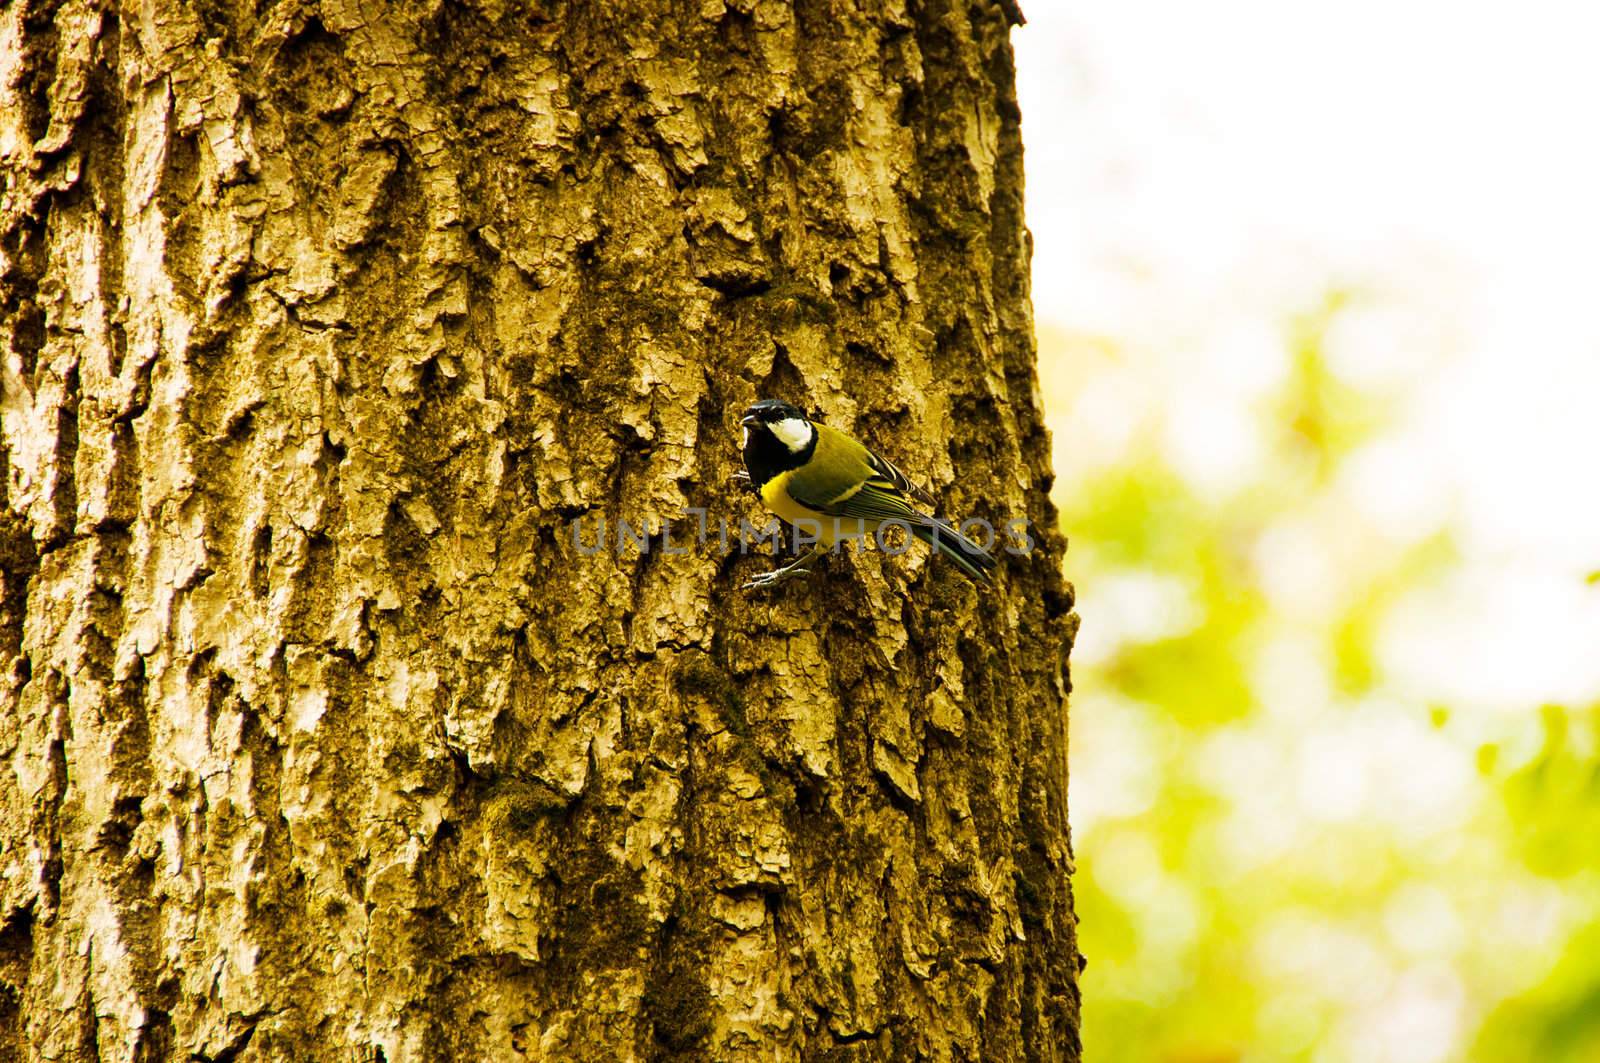 Bird on tree branches  in autumn park